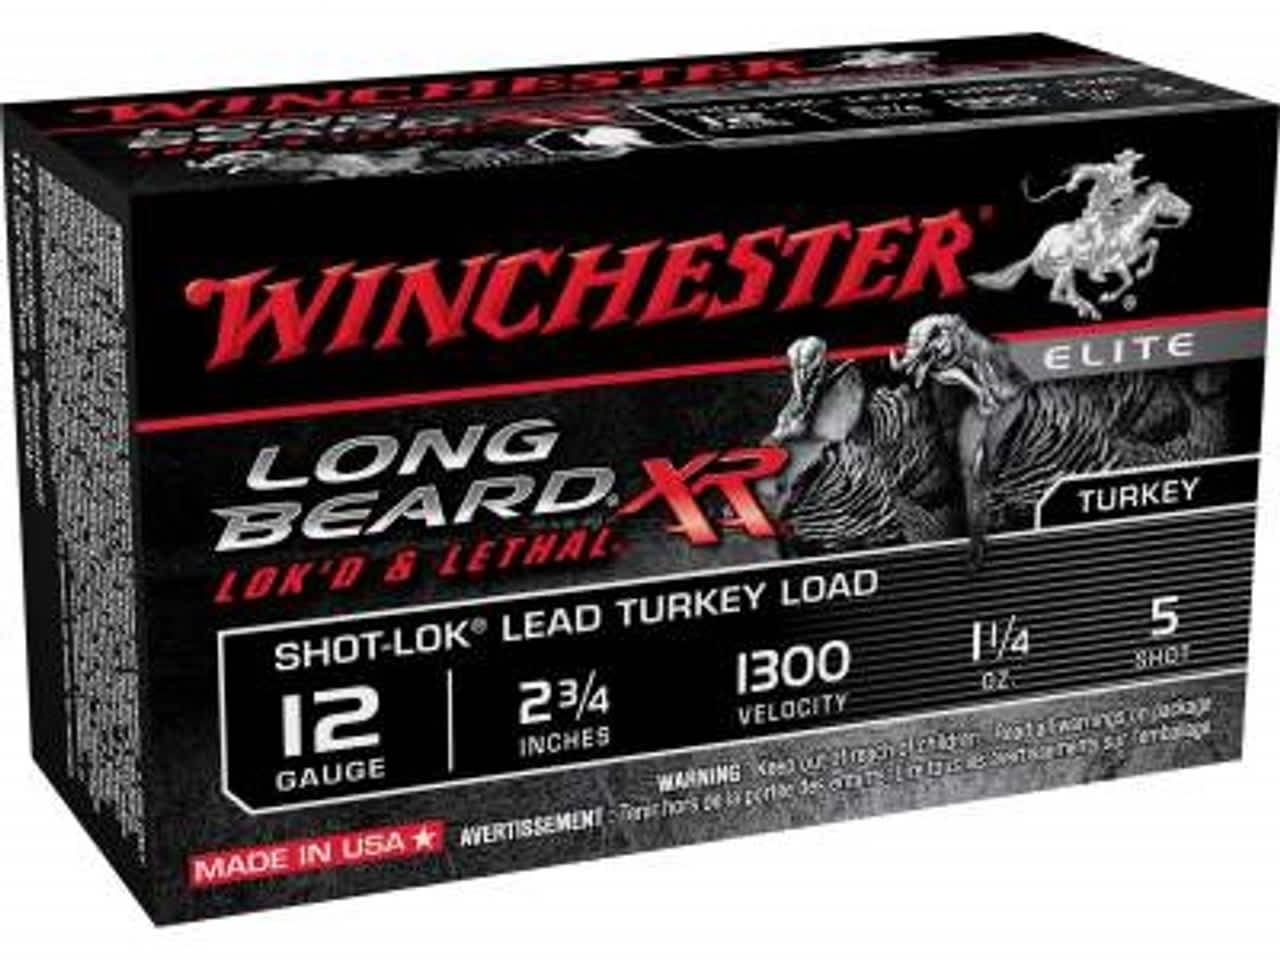 Winchester® Long Beard XR Turkey Shotshells